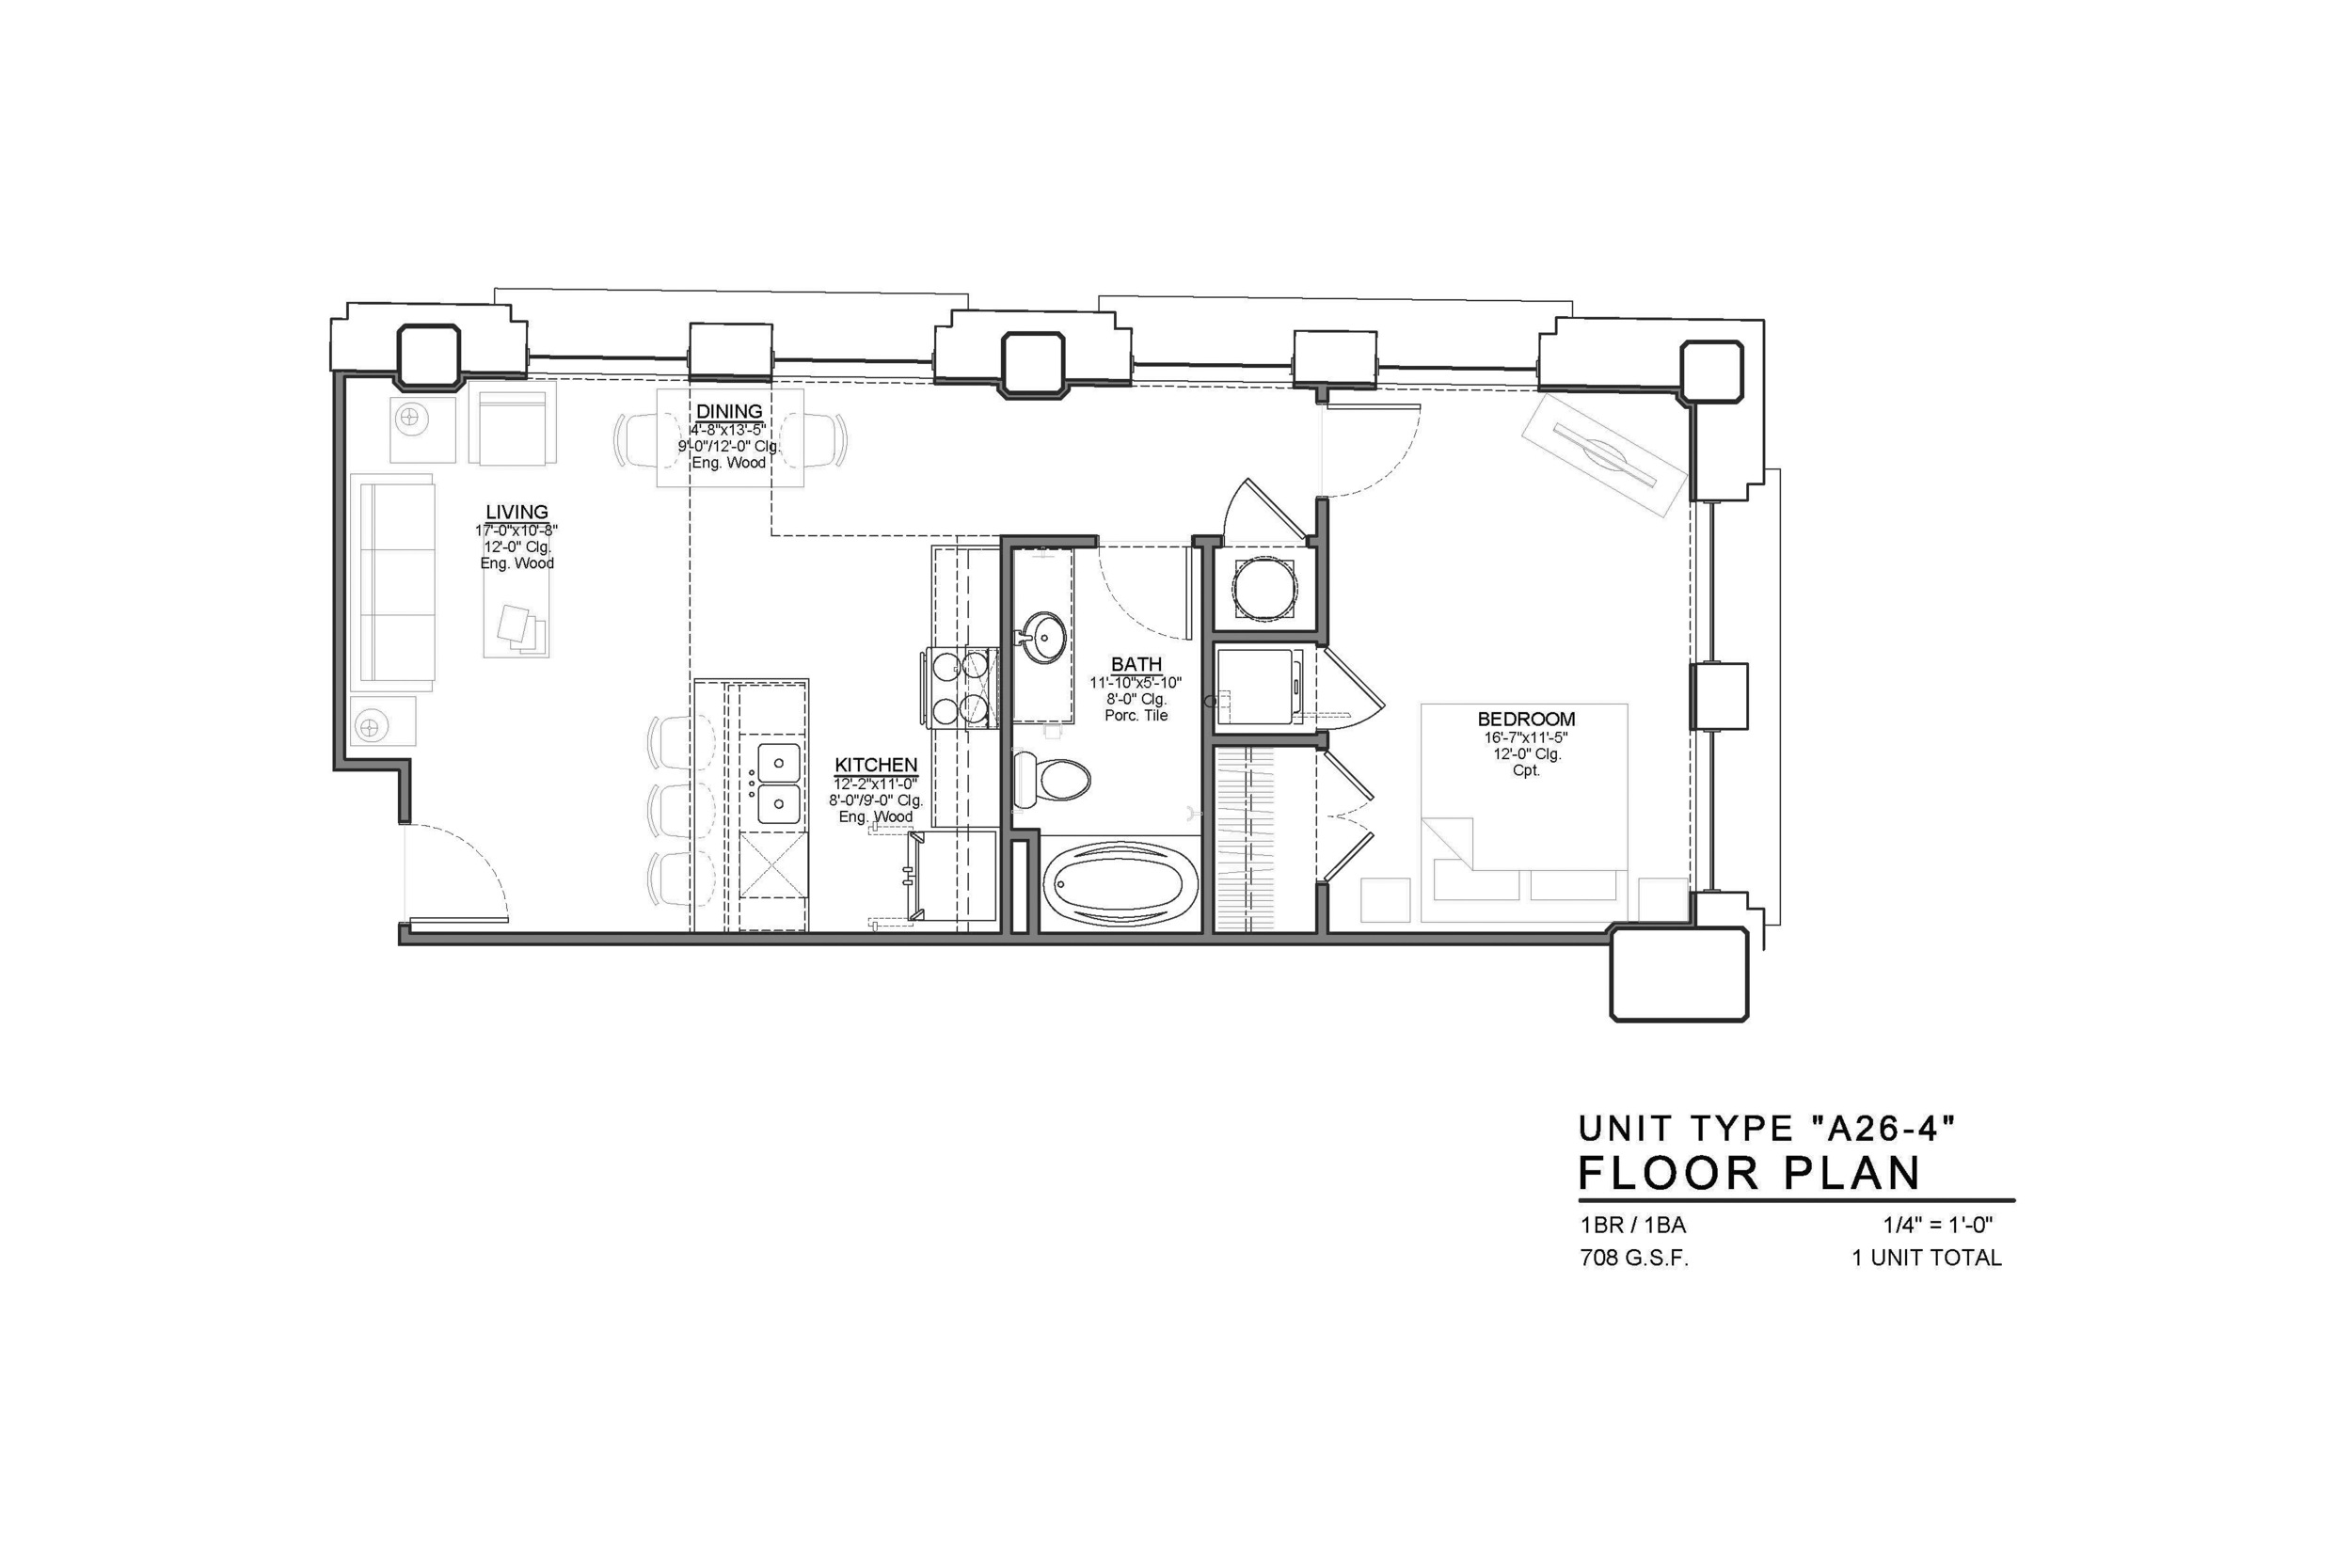 A26-4 FLOOR PLAN: 1 BEDROOM / 1 BATH